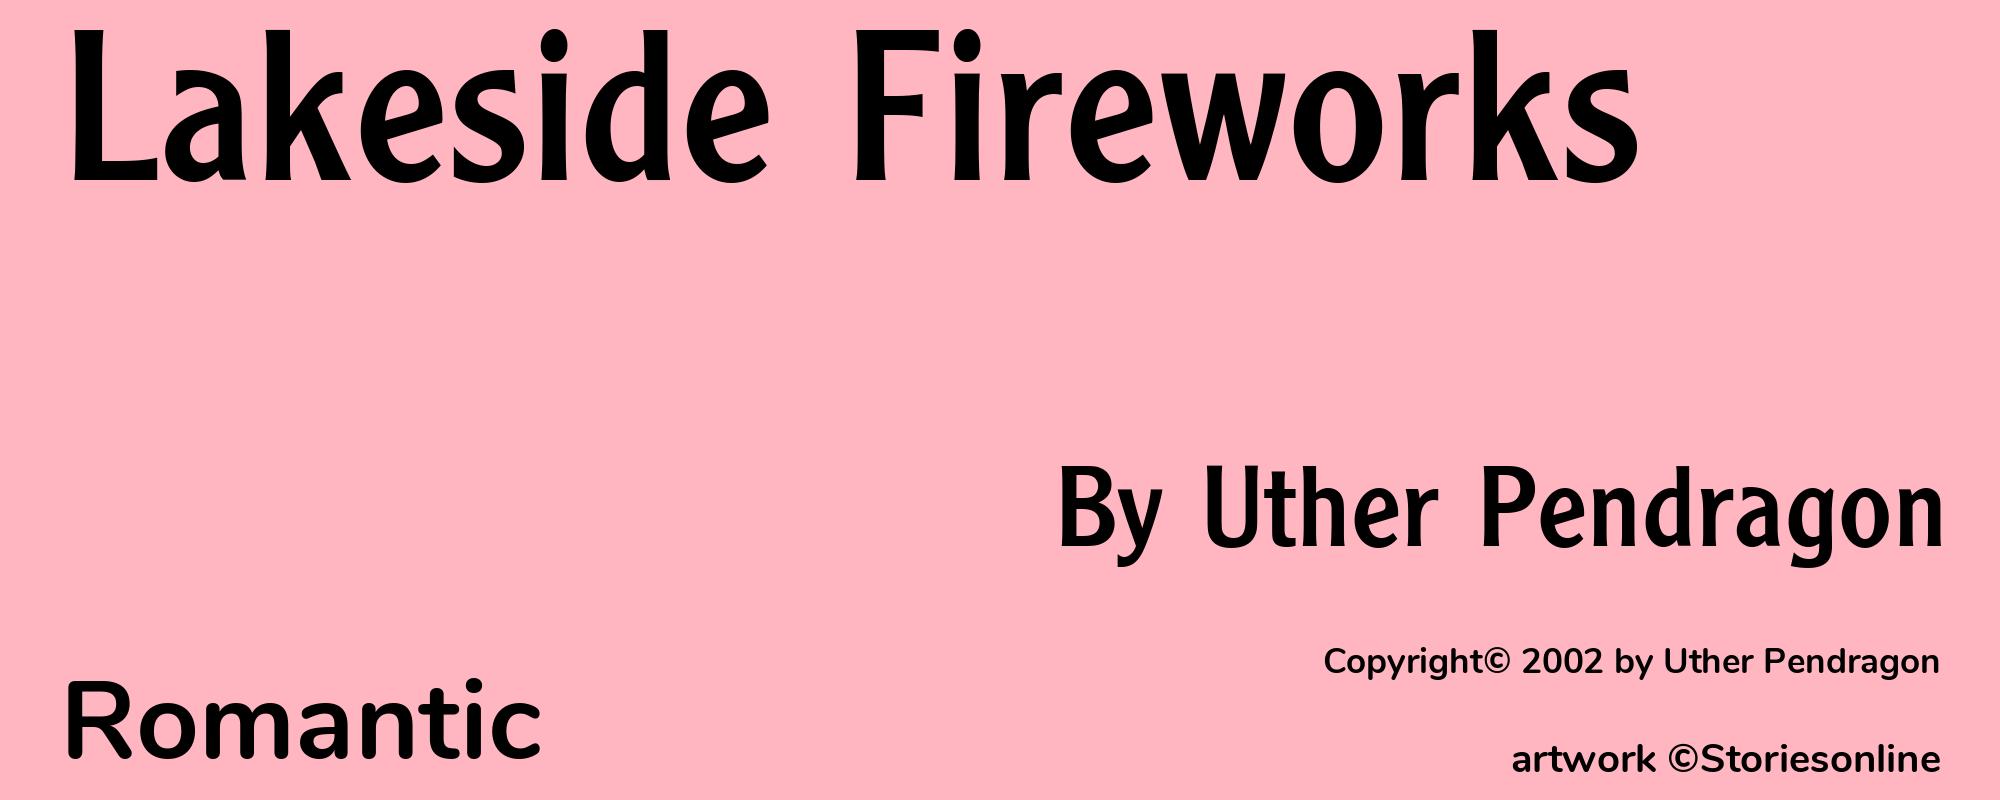 Lakeside Fireworks - Cover